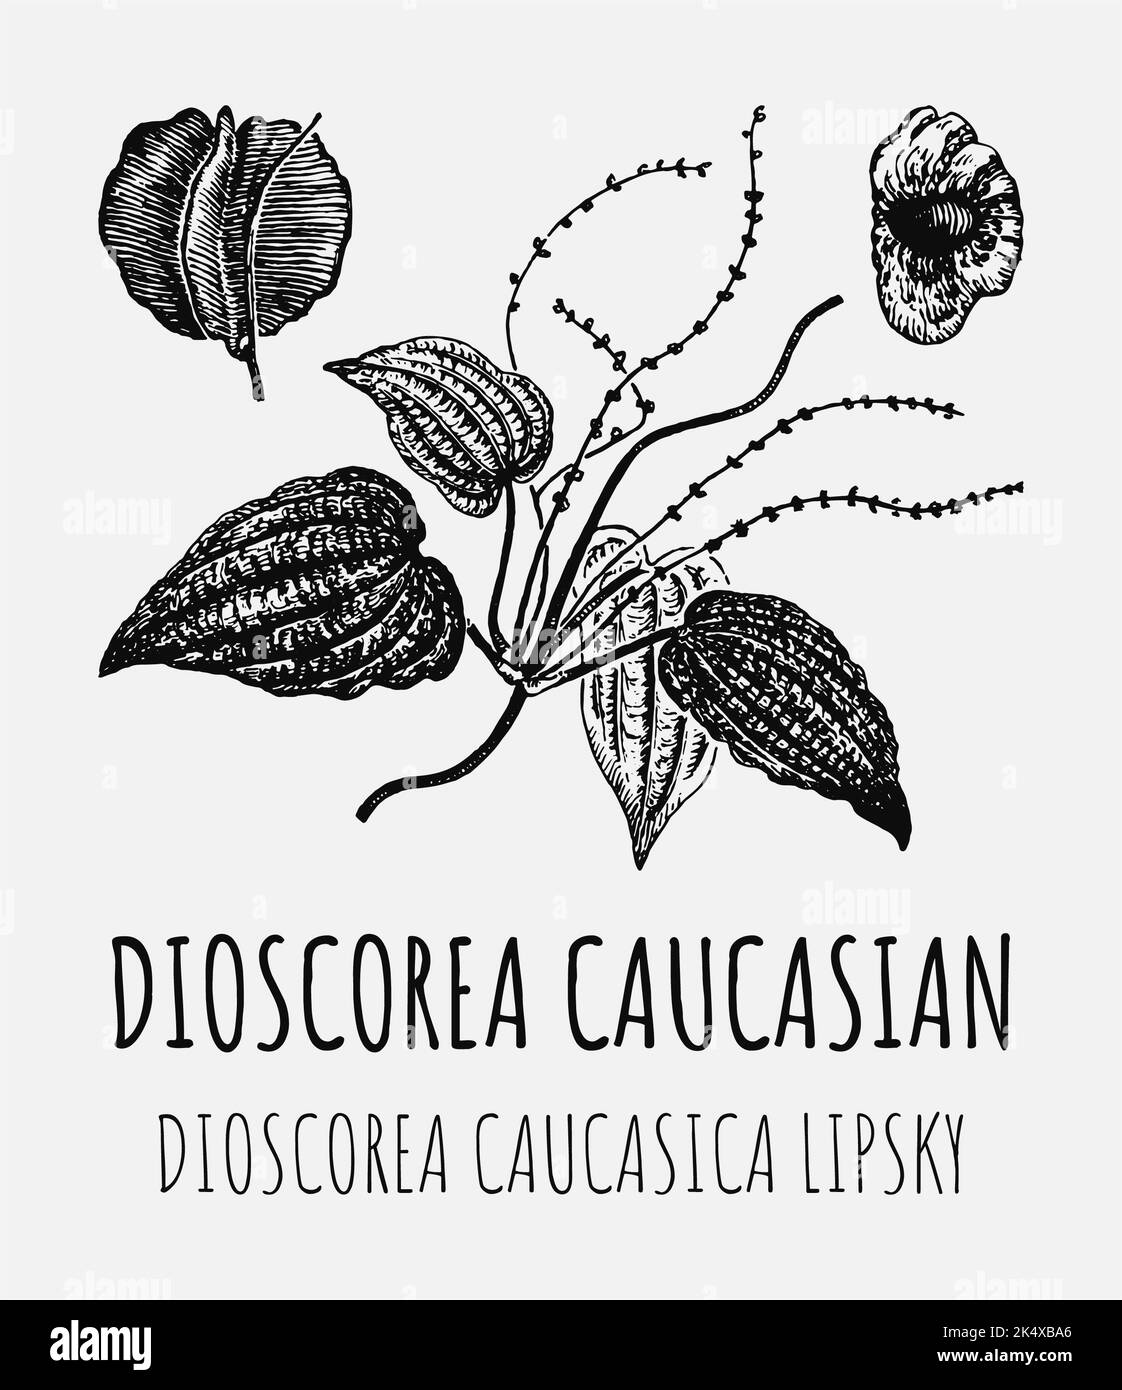 Vector drawings of DIOSCOREA CAUCASIAN. Hand drawn illustration. Latin name DIOSCOREA CAUCASICA LIPSKY. Stock Photo